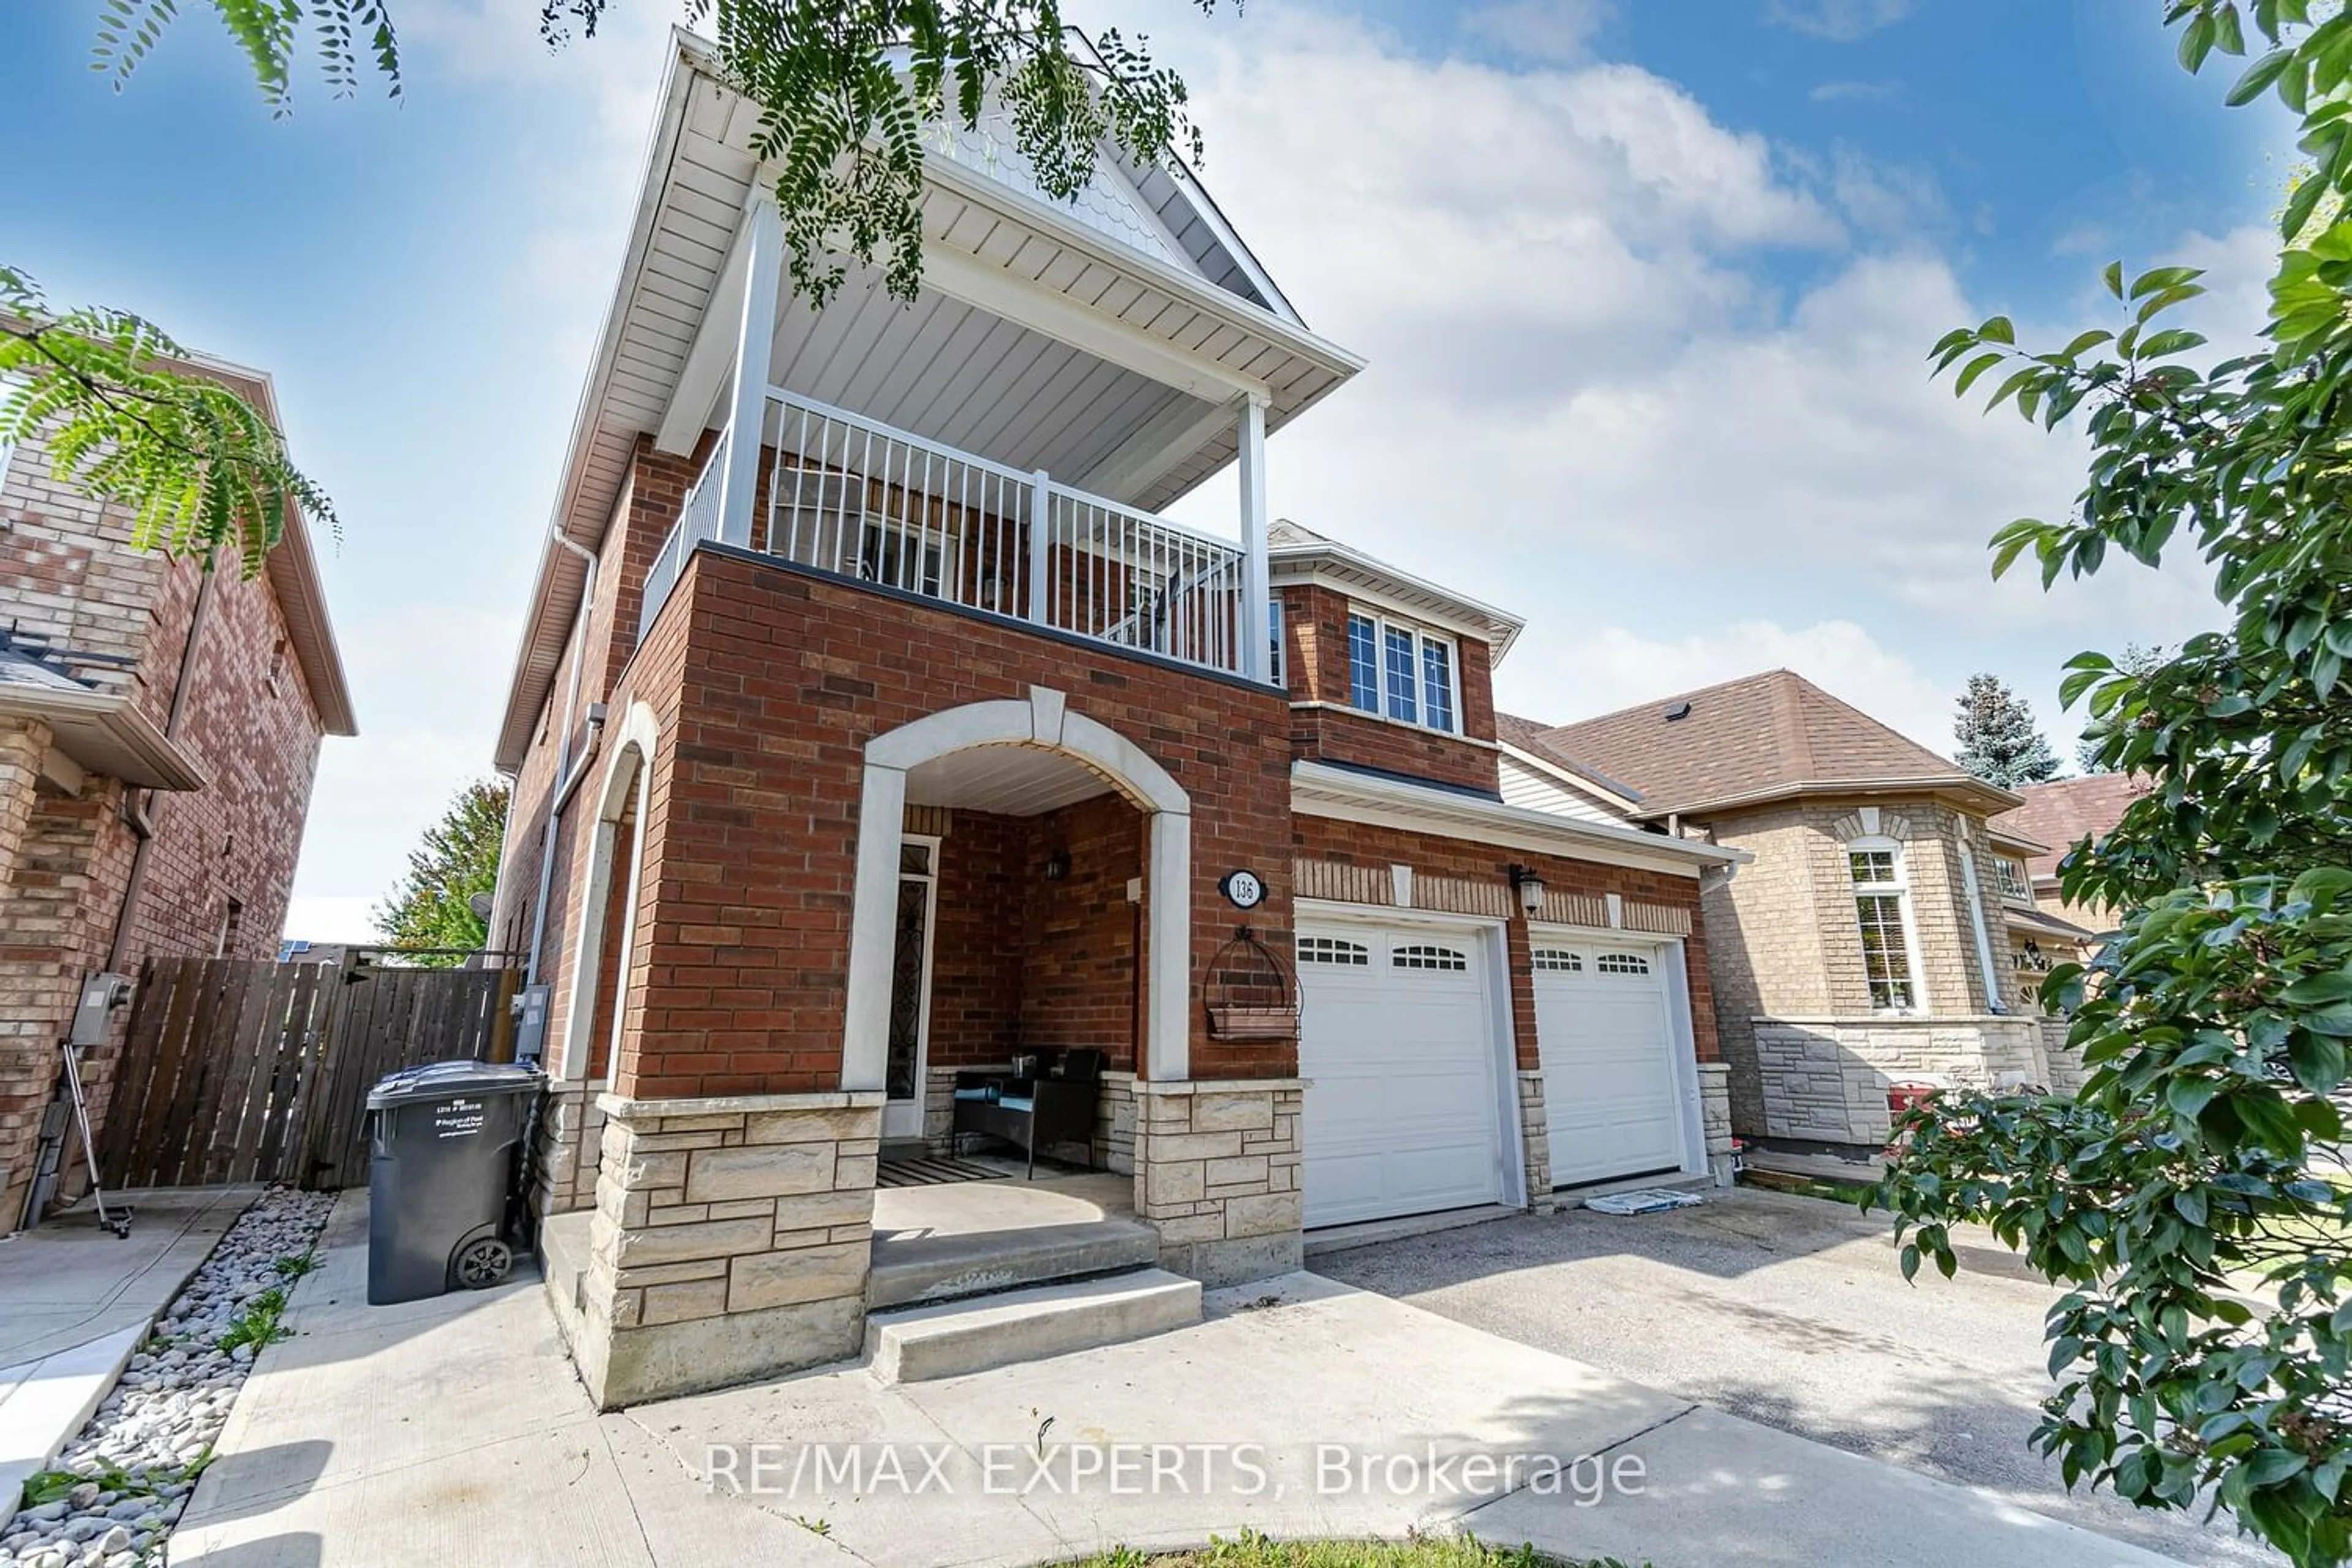 Home with brick exterior material for 136 Van Scott Dr, Brampton Ontario L7A 1N5